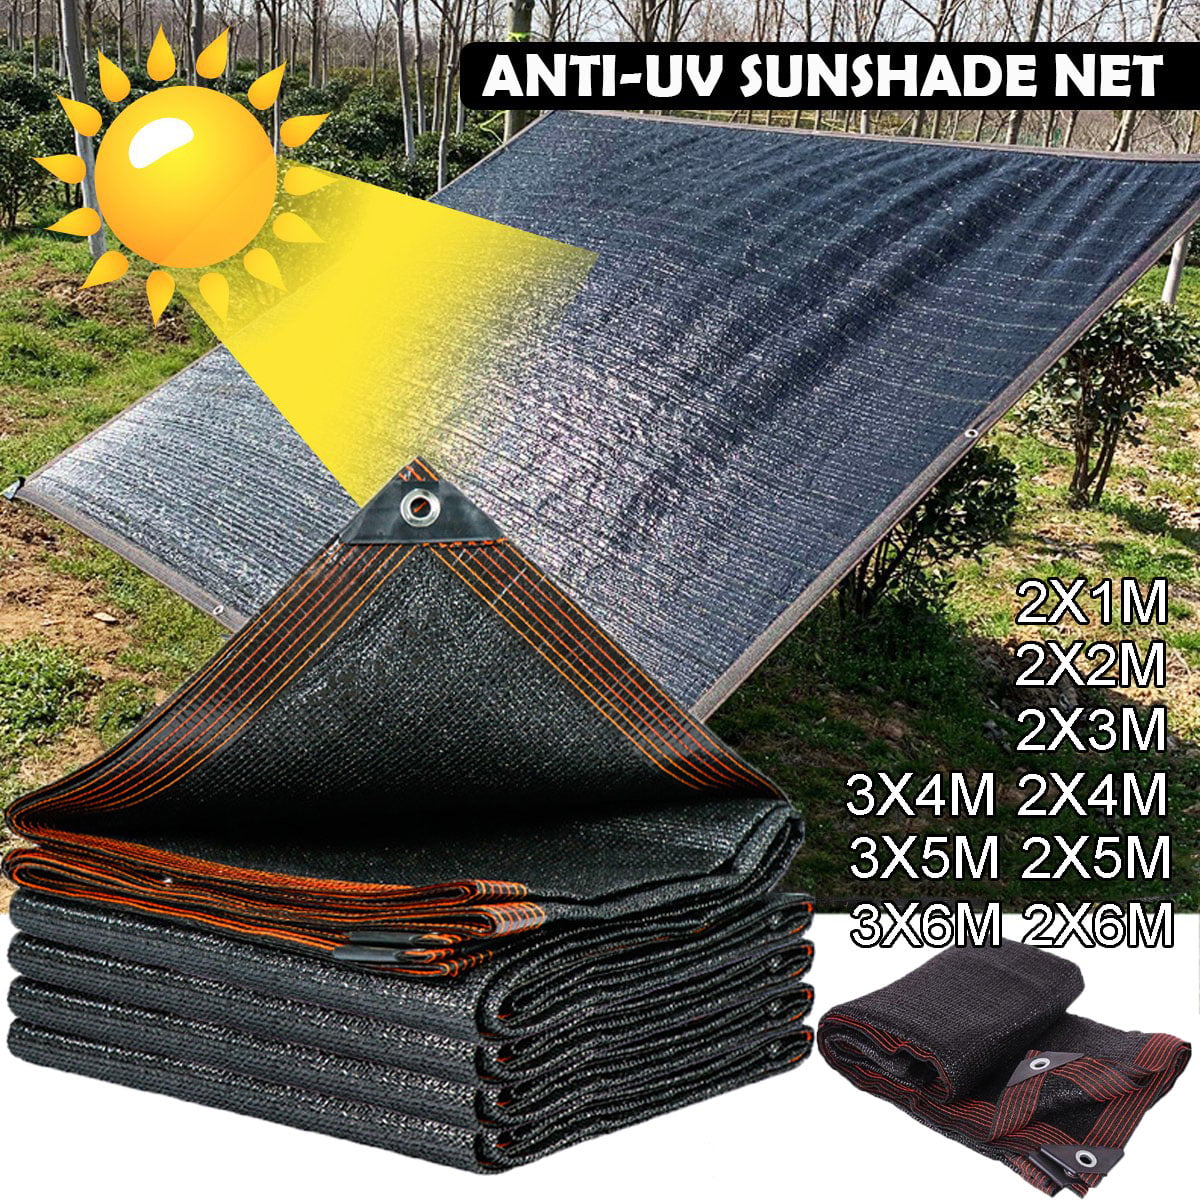 Details about   Black Anti-UV Netting Sun Shade Cover Garden Supplies Yard Shading Net 